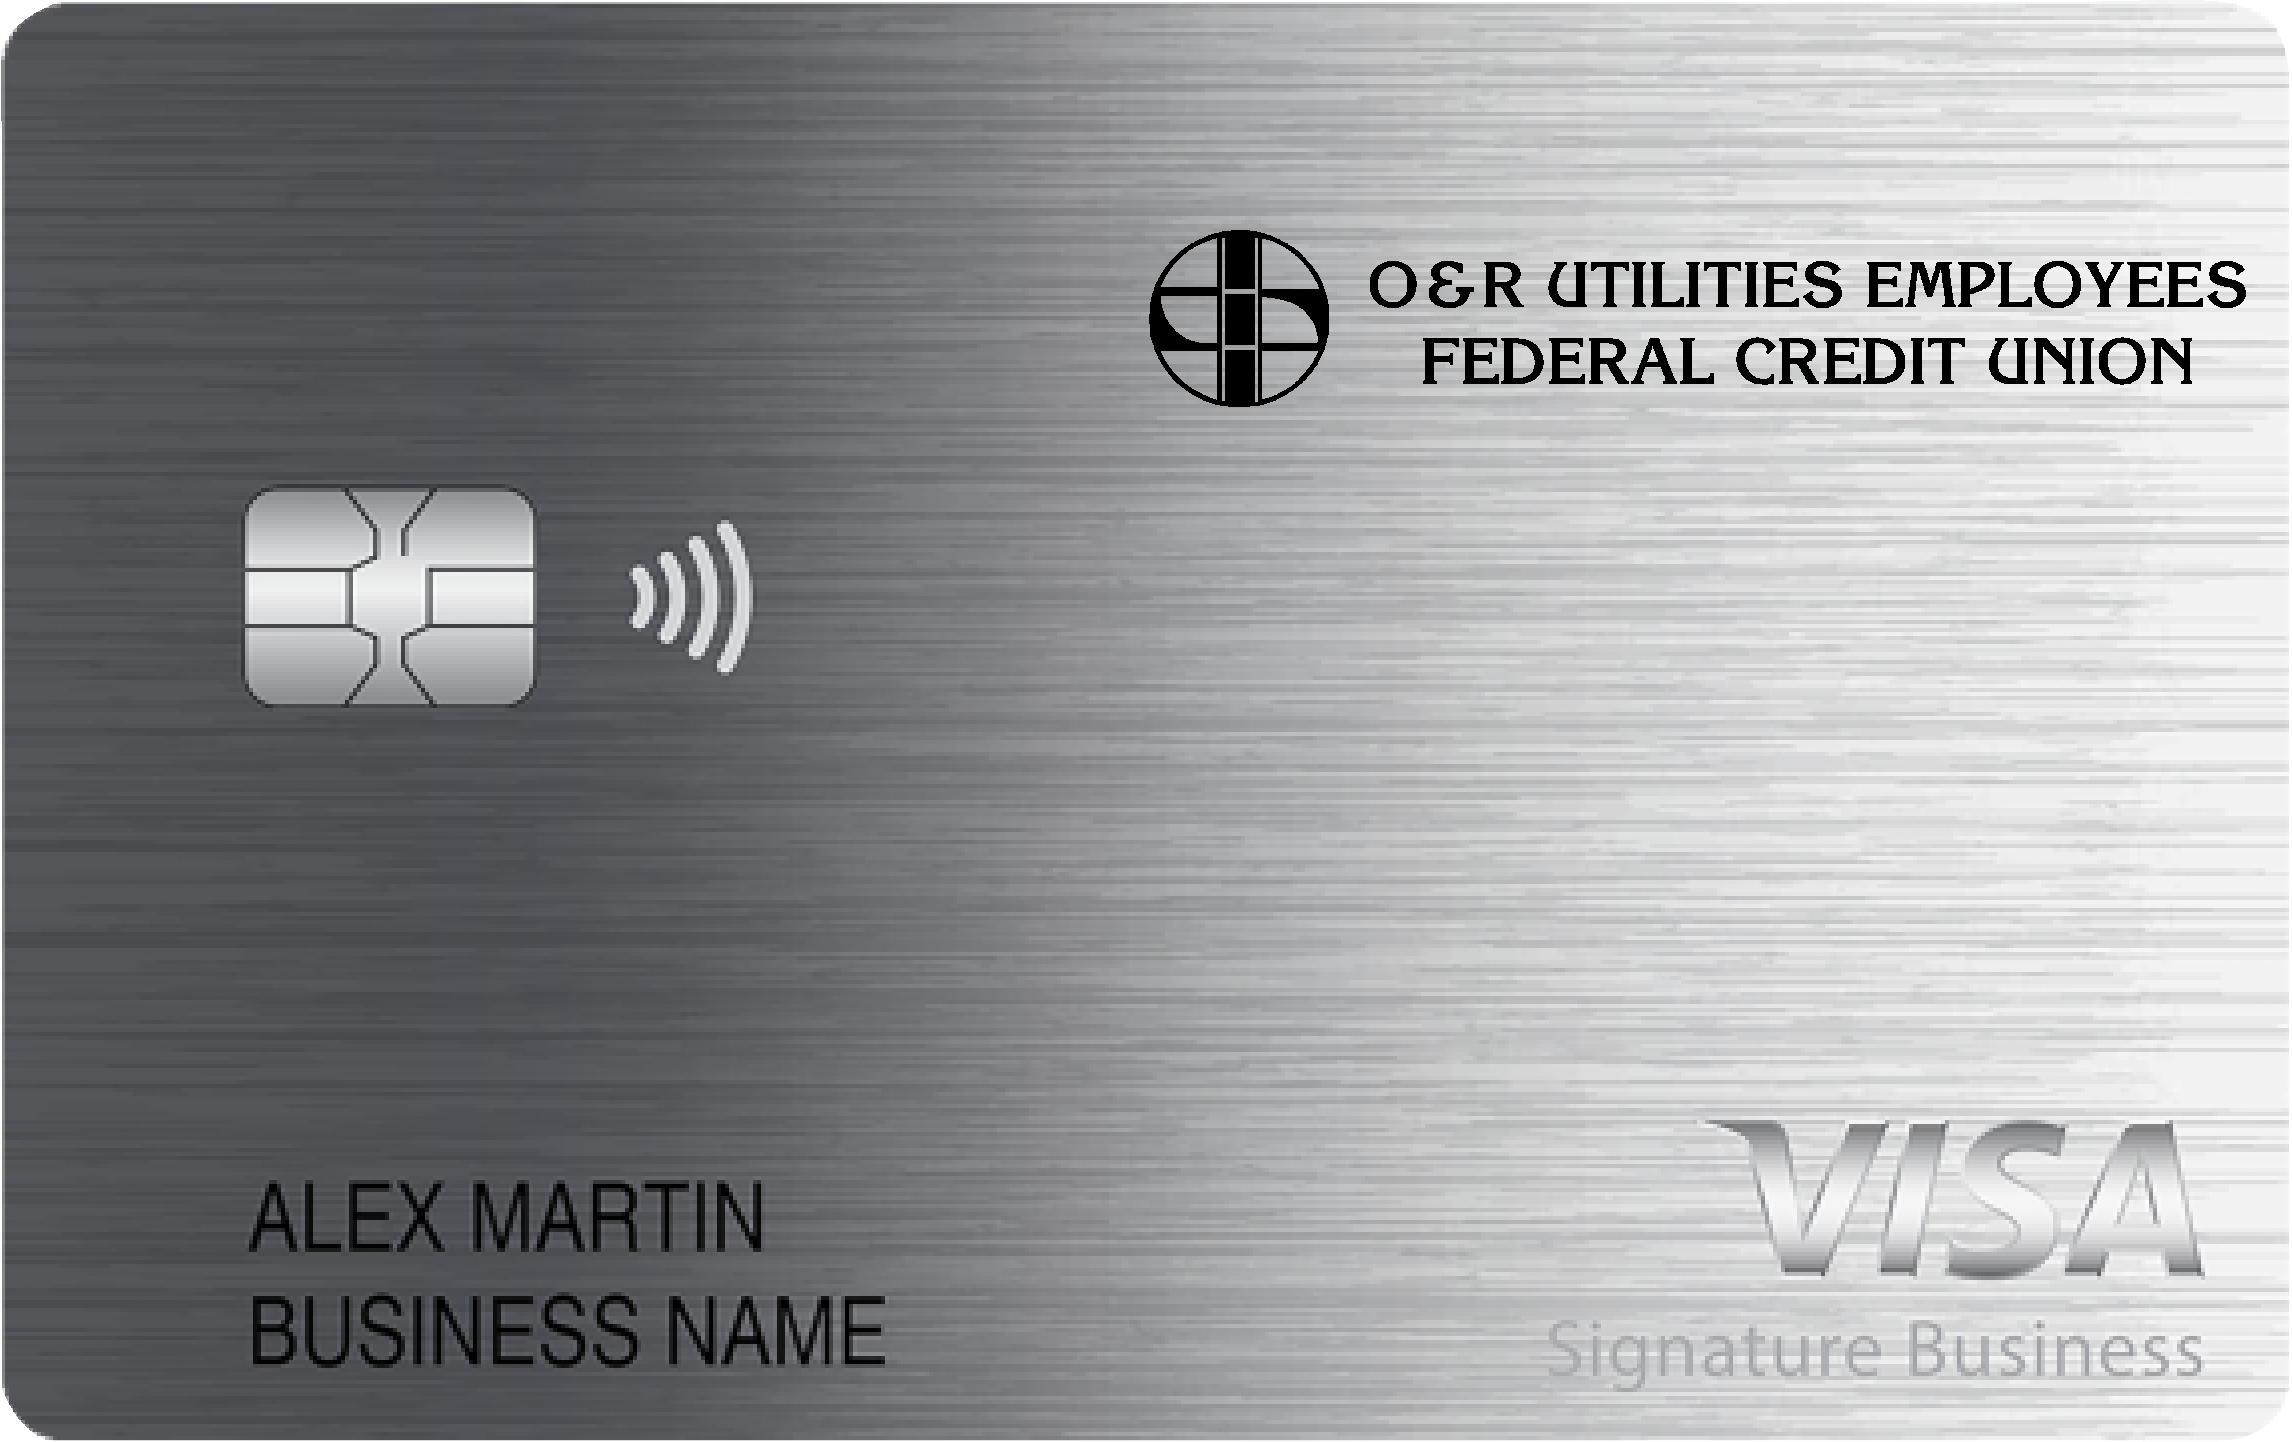 O&R Utilities EFCU Smart Business Rewards Card